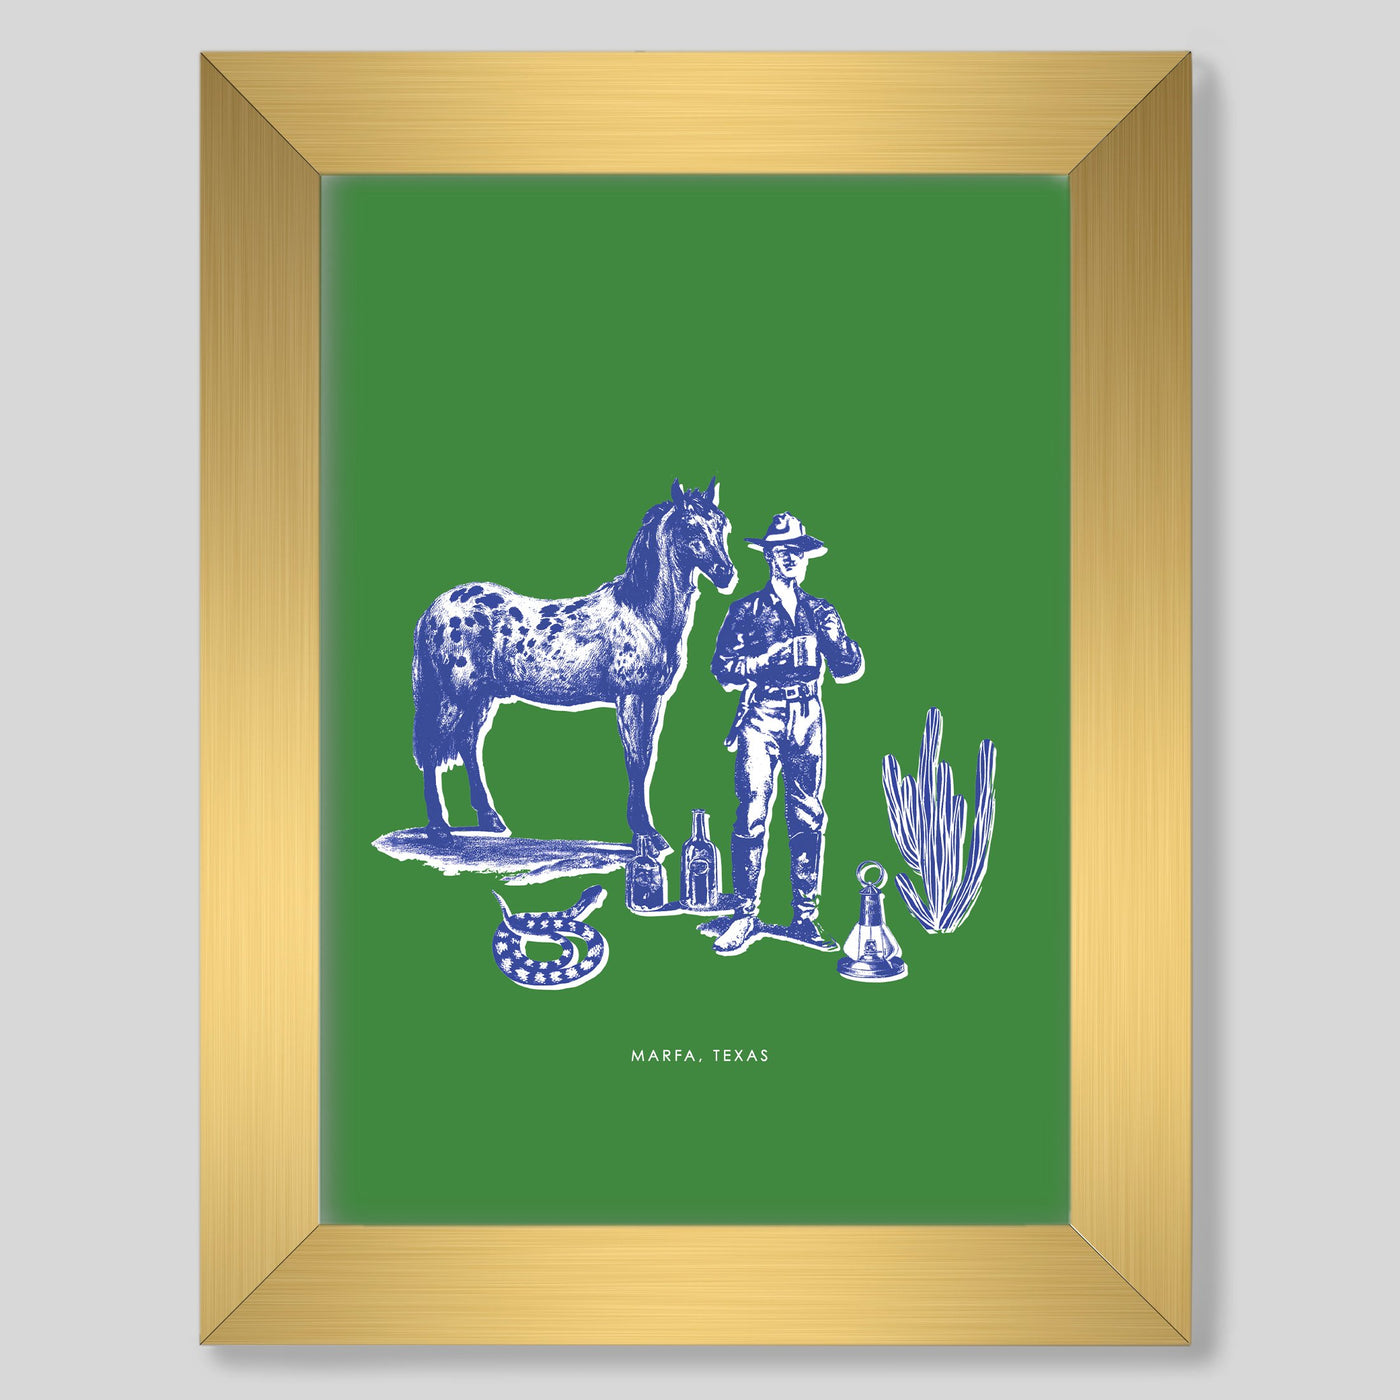 Gallery Prints Green / 8x10 / Gold Frame Marfa Cowboy Print Katie Kime